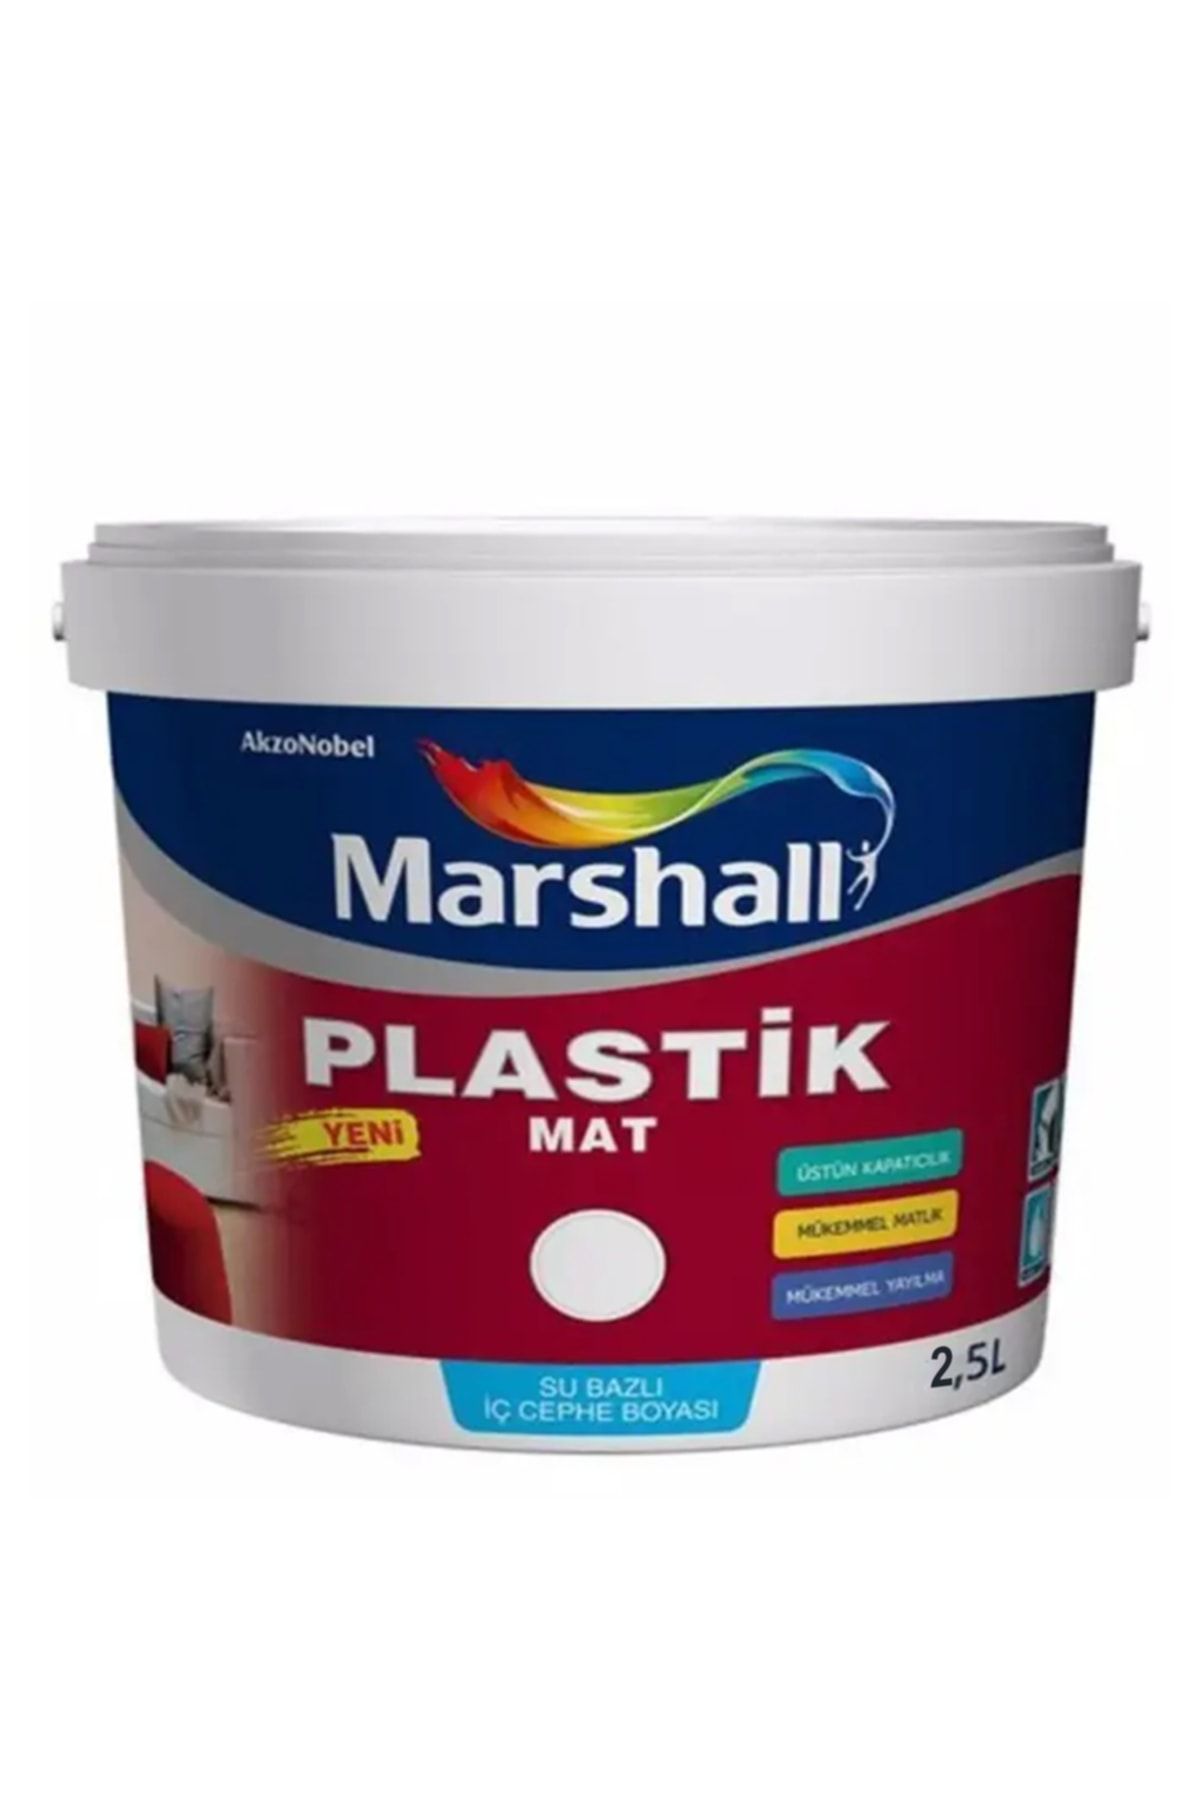 Marshall Plastik Mat Silinebilir Iç Cephe Boyası Serap 2,5 Lt (3,5 Kg)